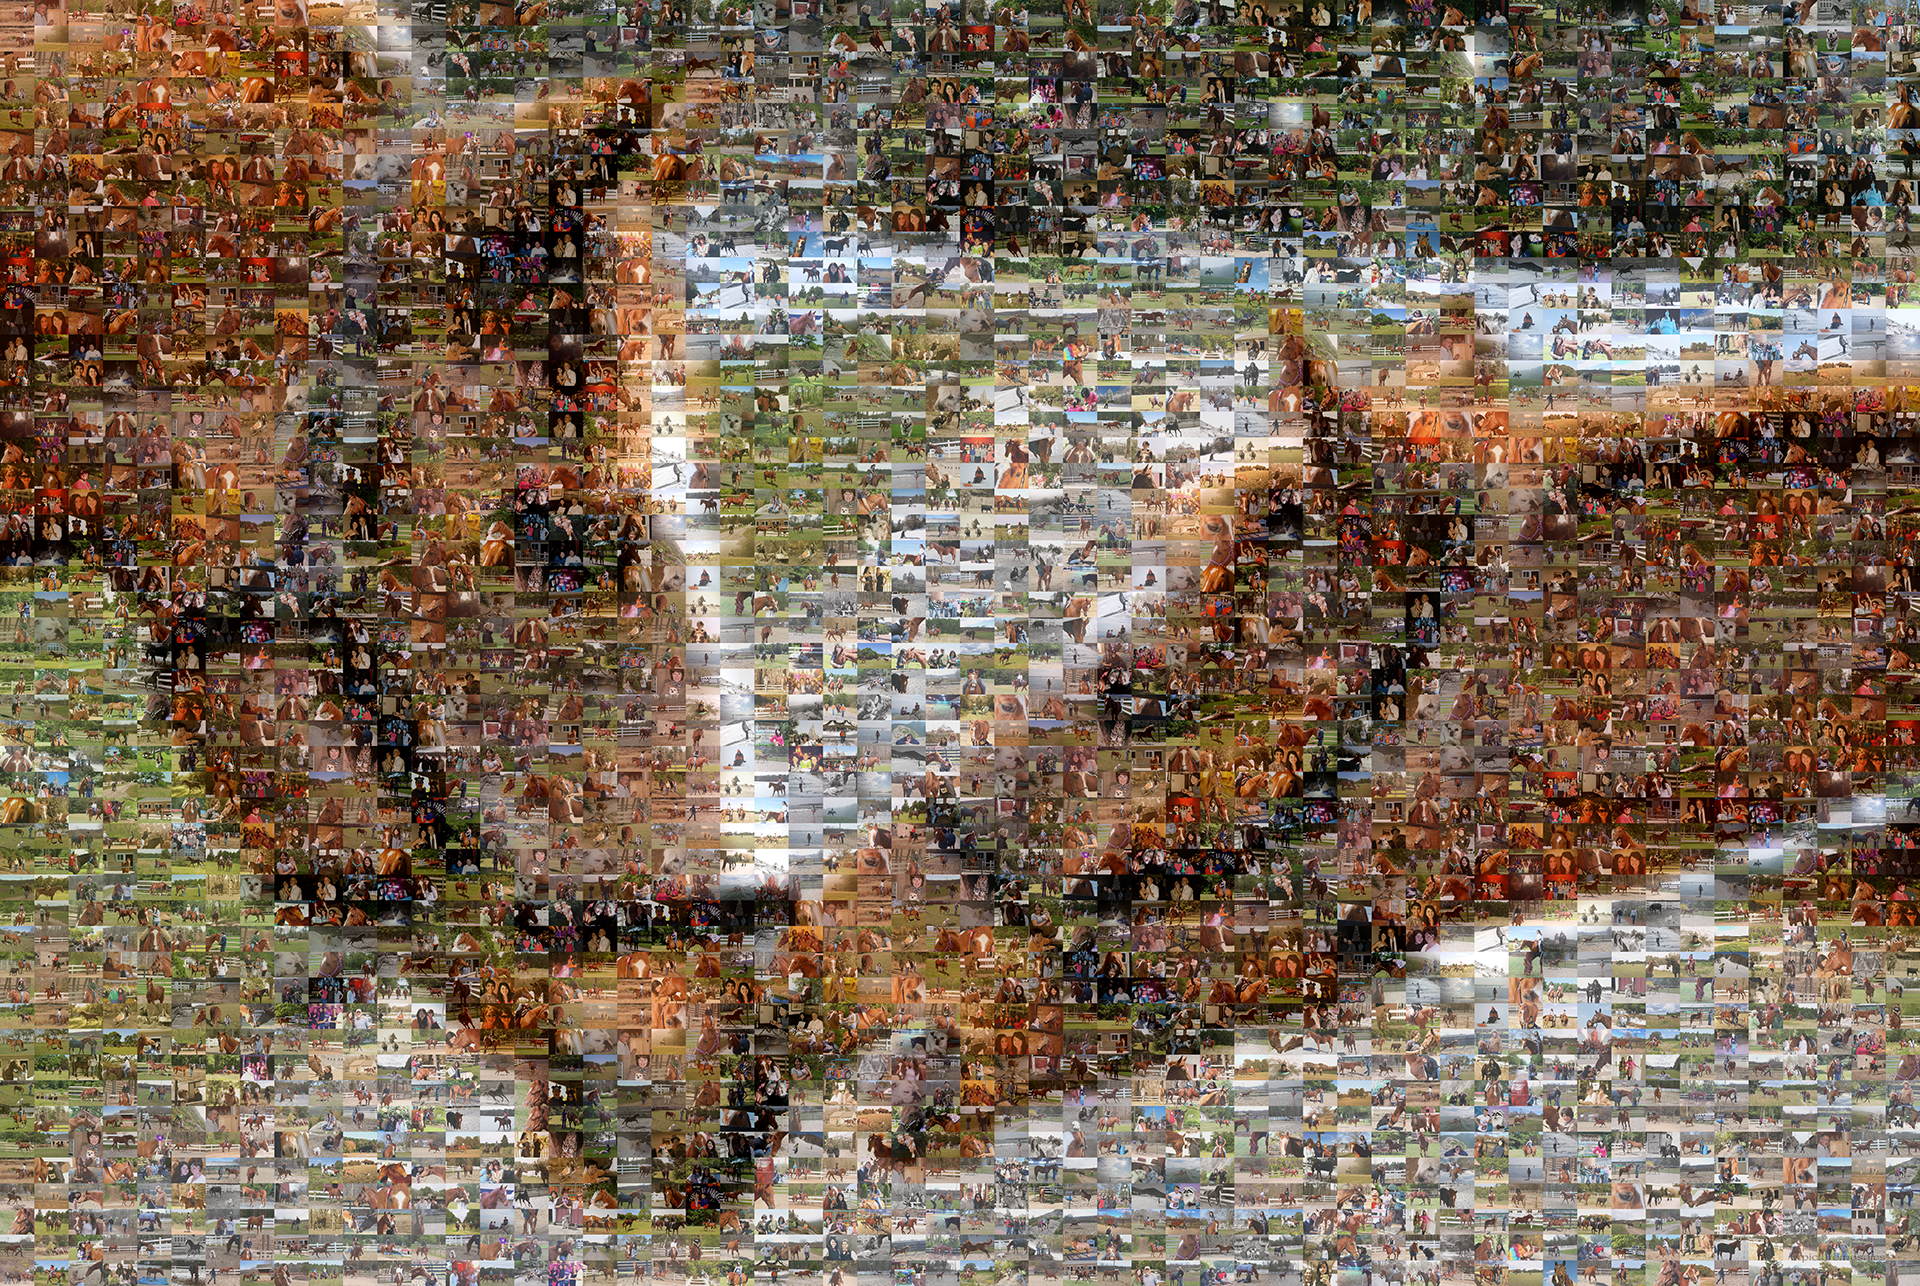 photo mosaic created using 652 photos